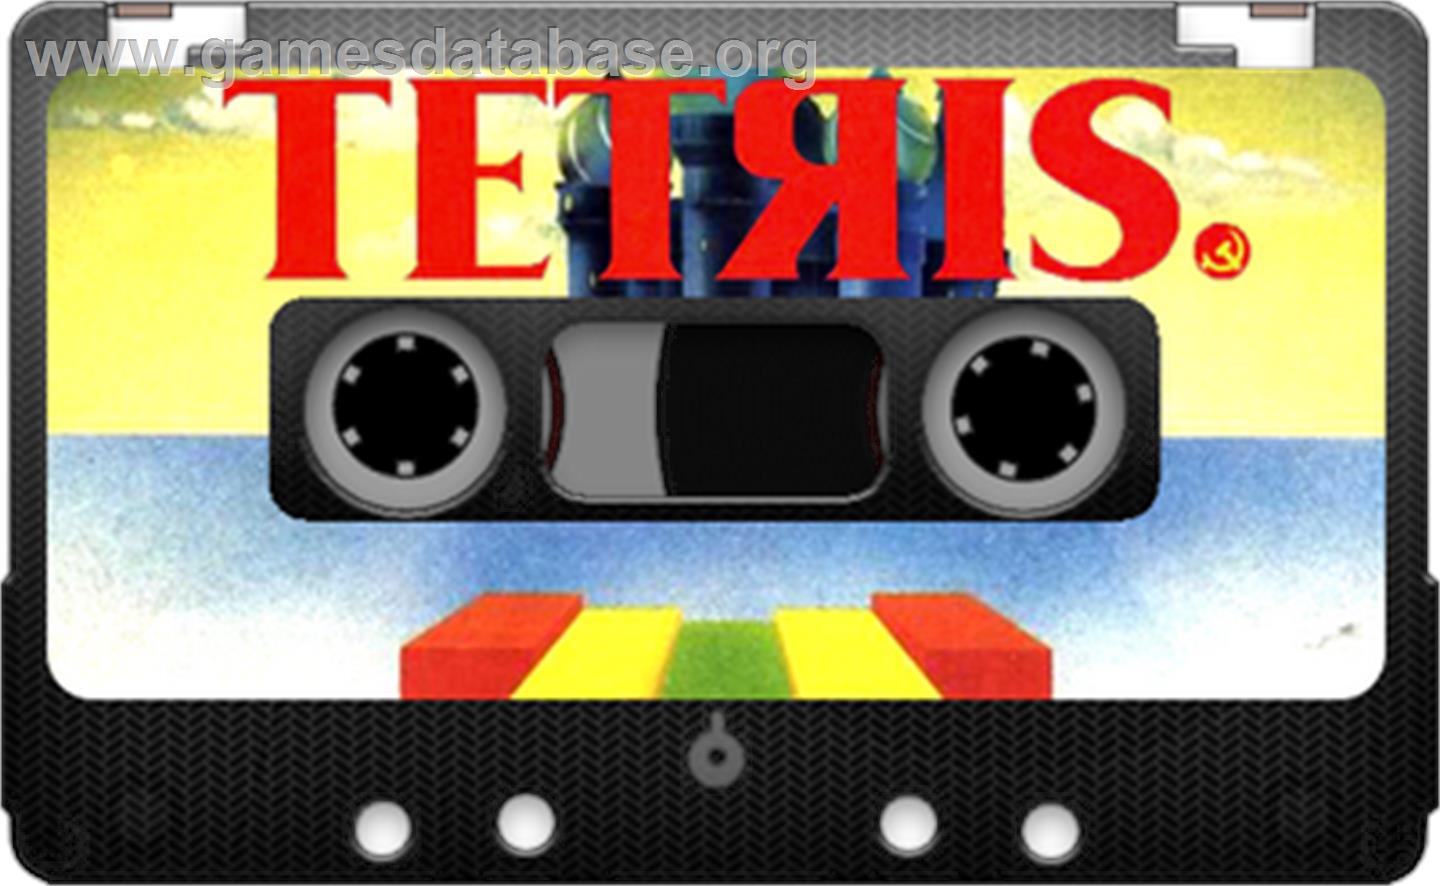 Tetris - Sinclair ZX Spectrum - Artwork - Cartridge